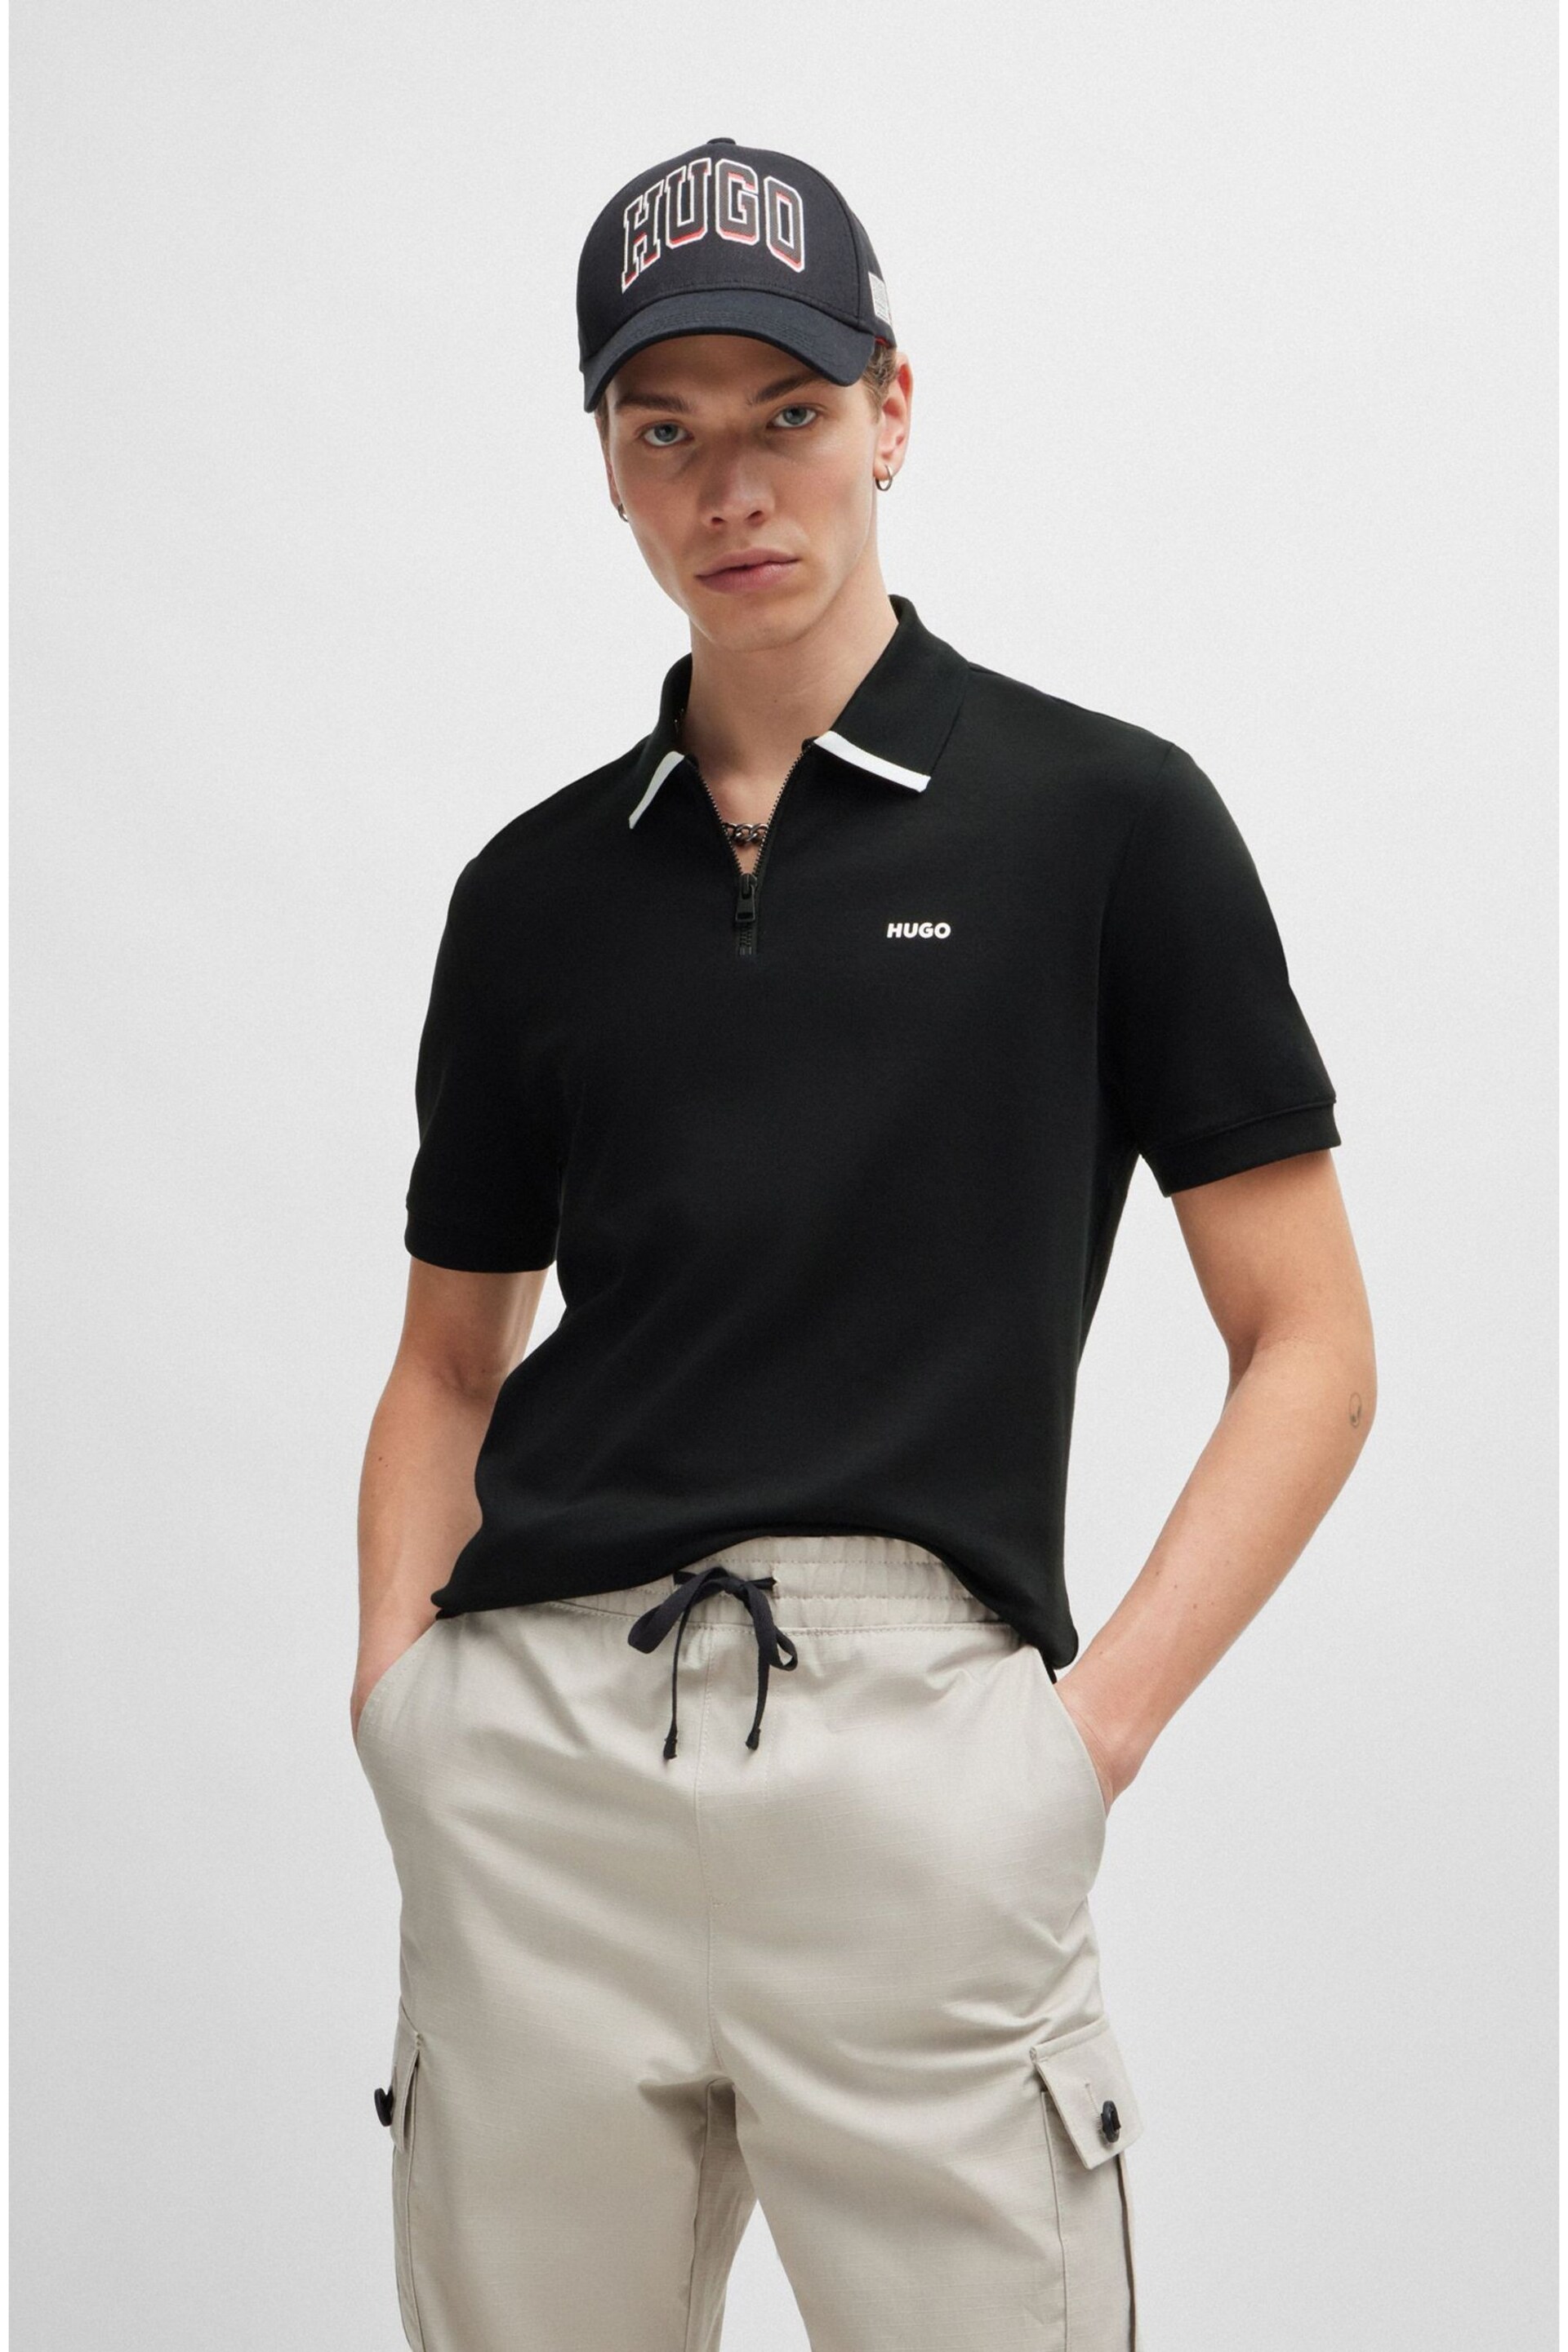 HUGO Zip Neck Contrast Detail Polo Shirt - Image 3 of 5